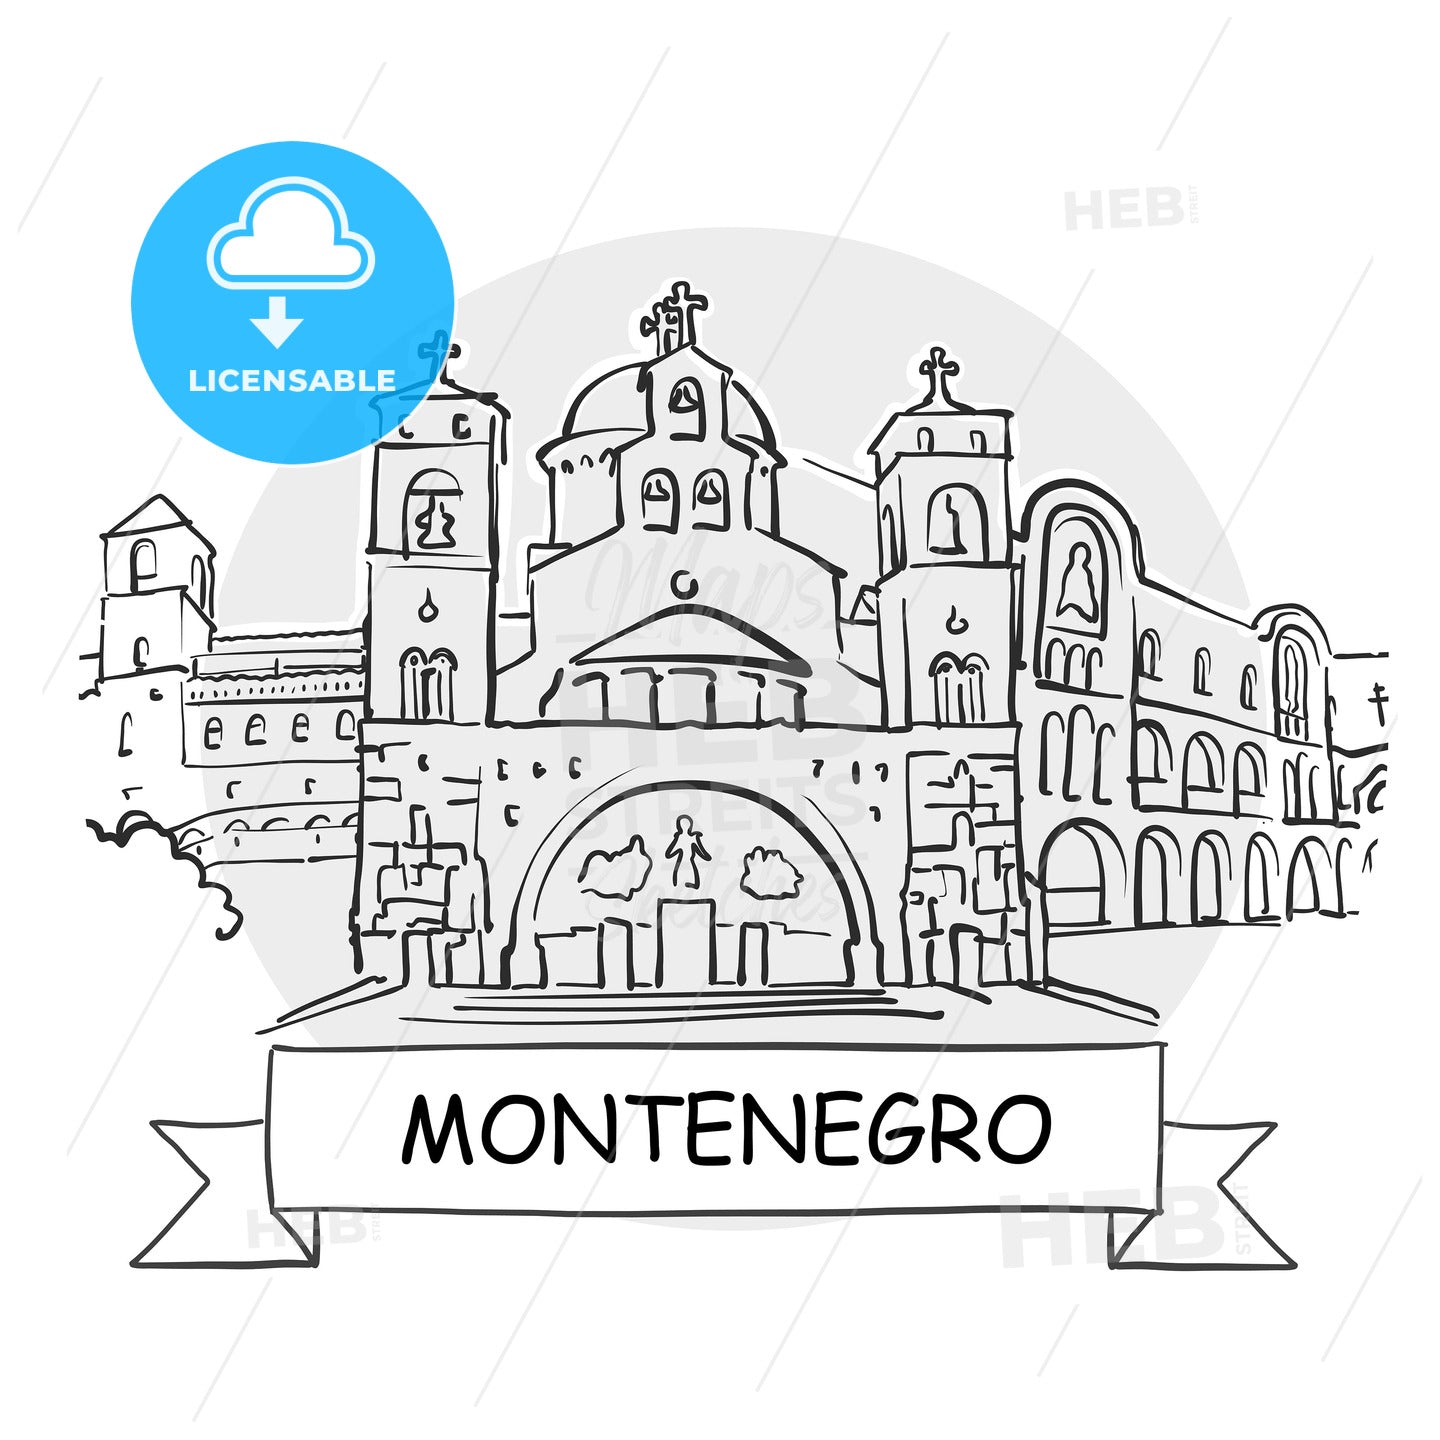 Montenegro hand-drawn urban vector sign – instant download